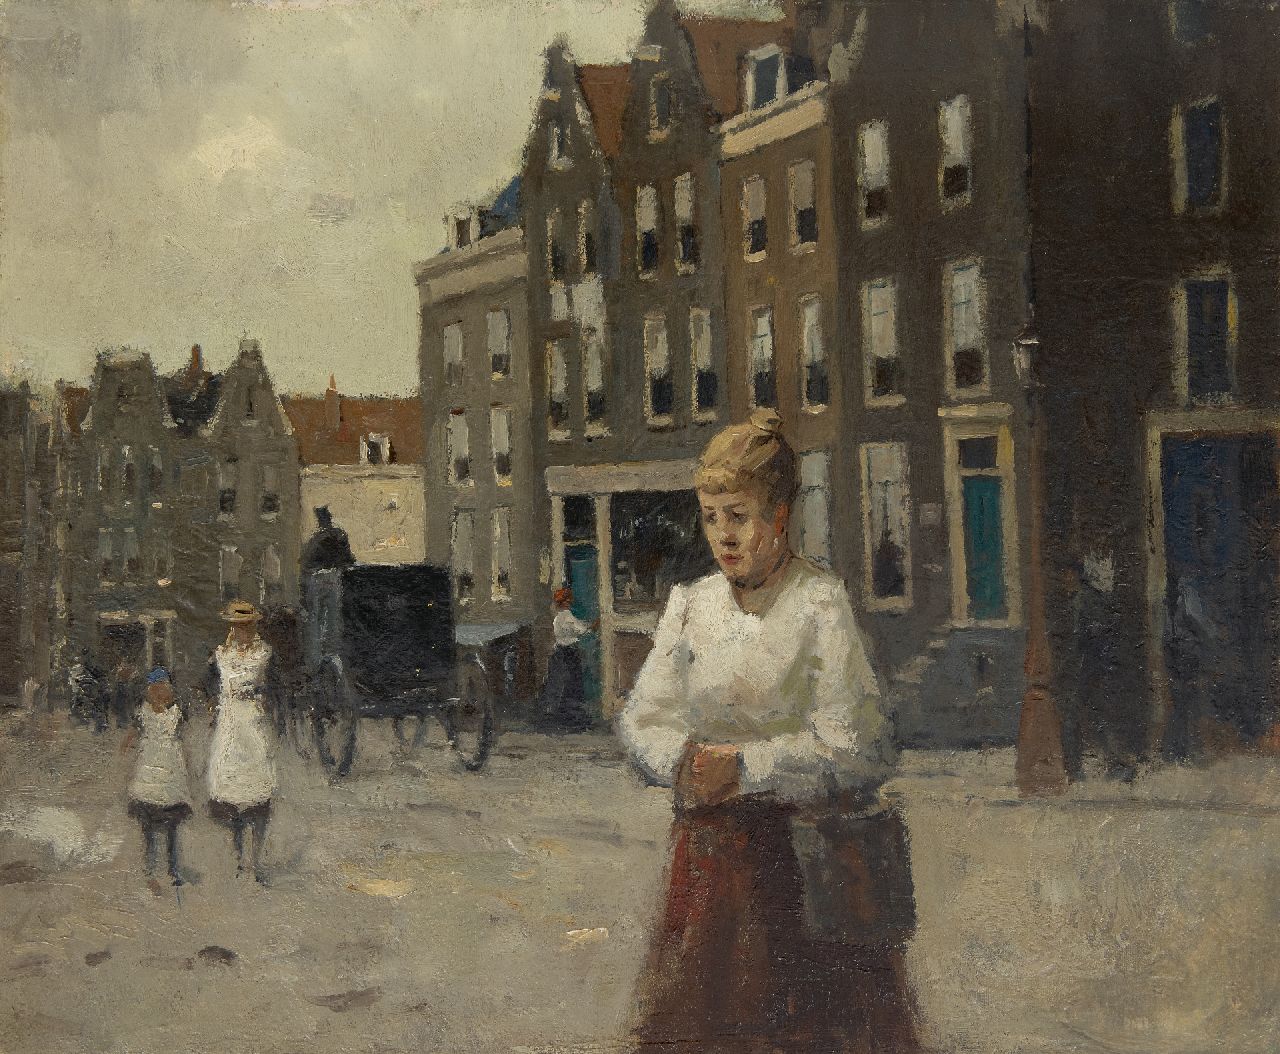 Ligtelijn E.J.  | Evert Jan Ligtelijn | Paintings offered for sale | A view in Haarlem, oil on canvas 51.1 x 60.4 cm